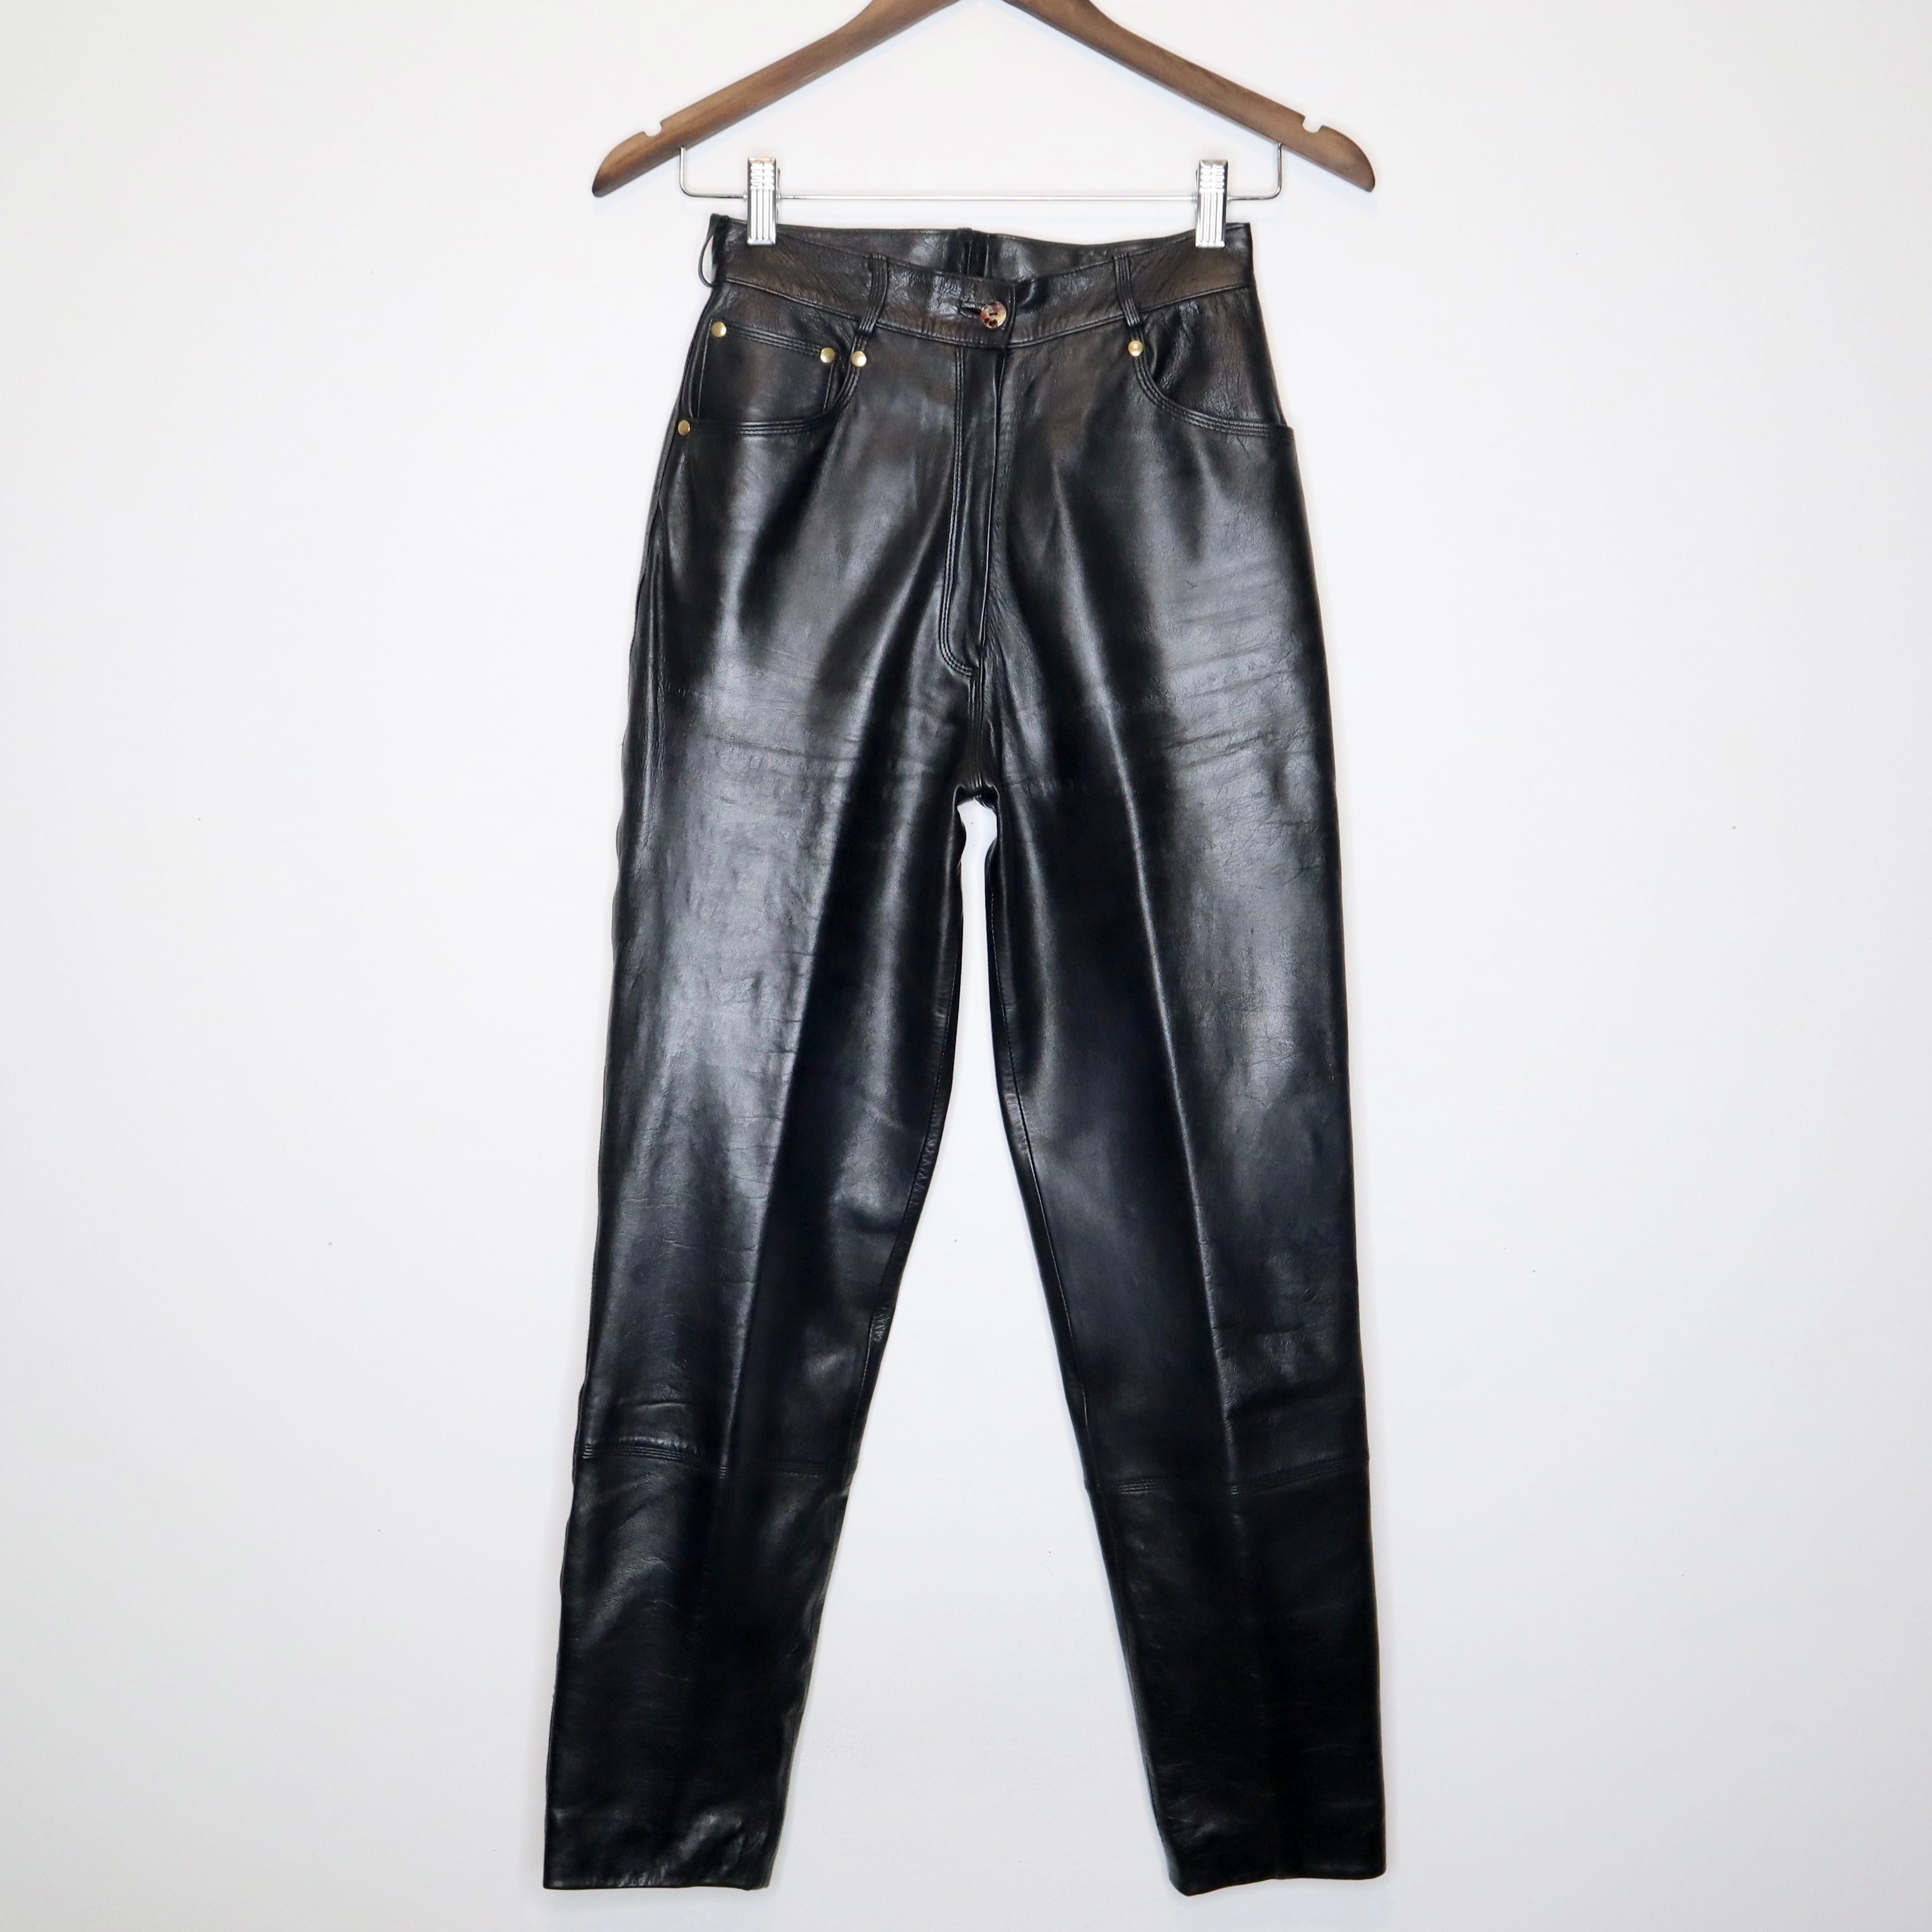 Designer Black Leather Pants (Small) - Imber Vintage